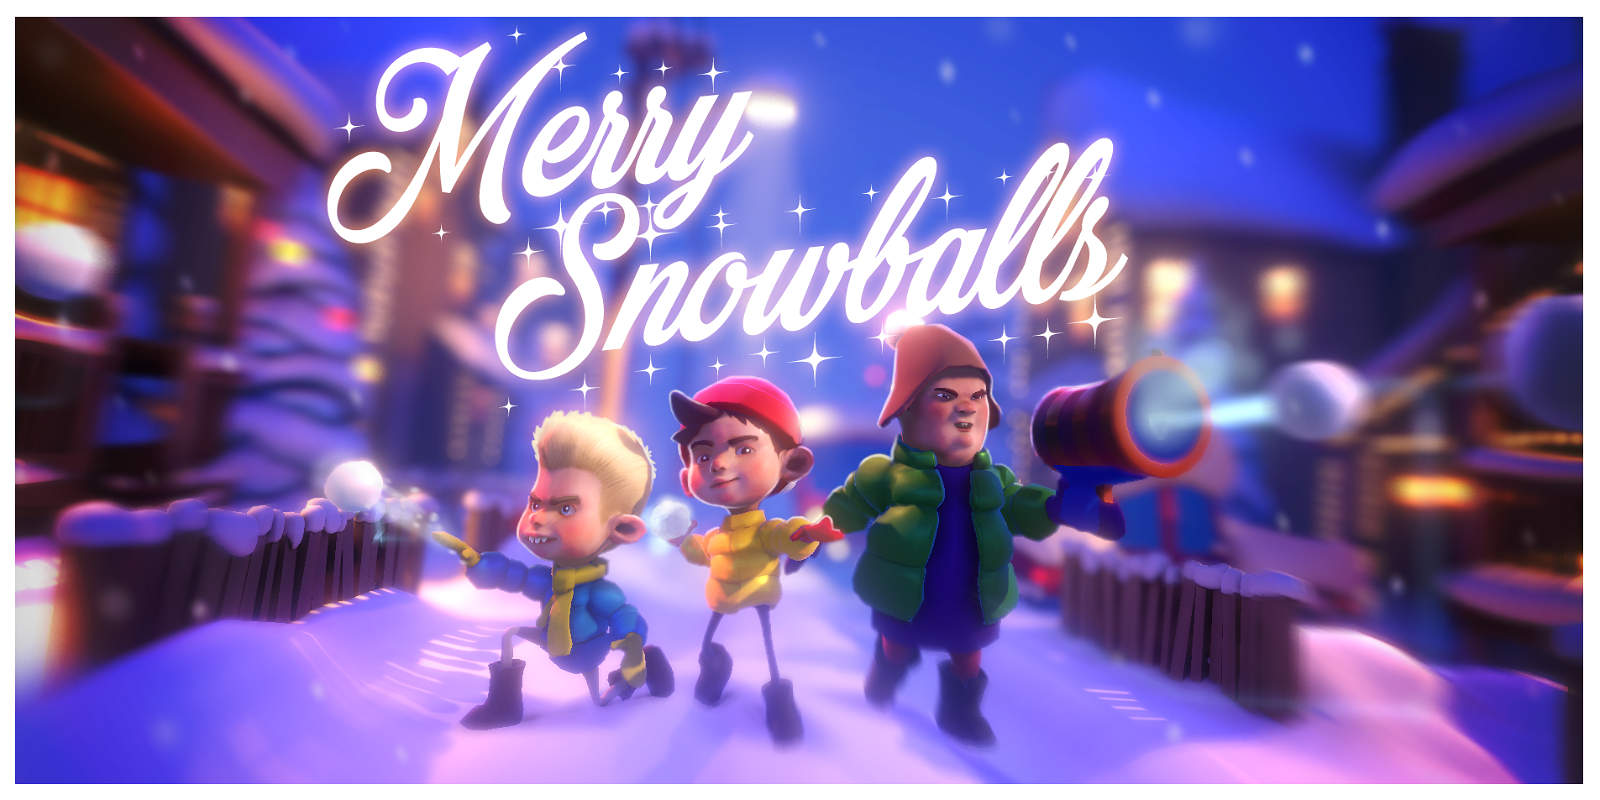 Image of Merry Snowballs